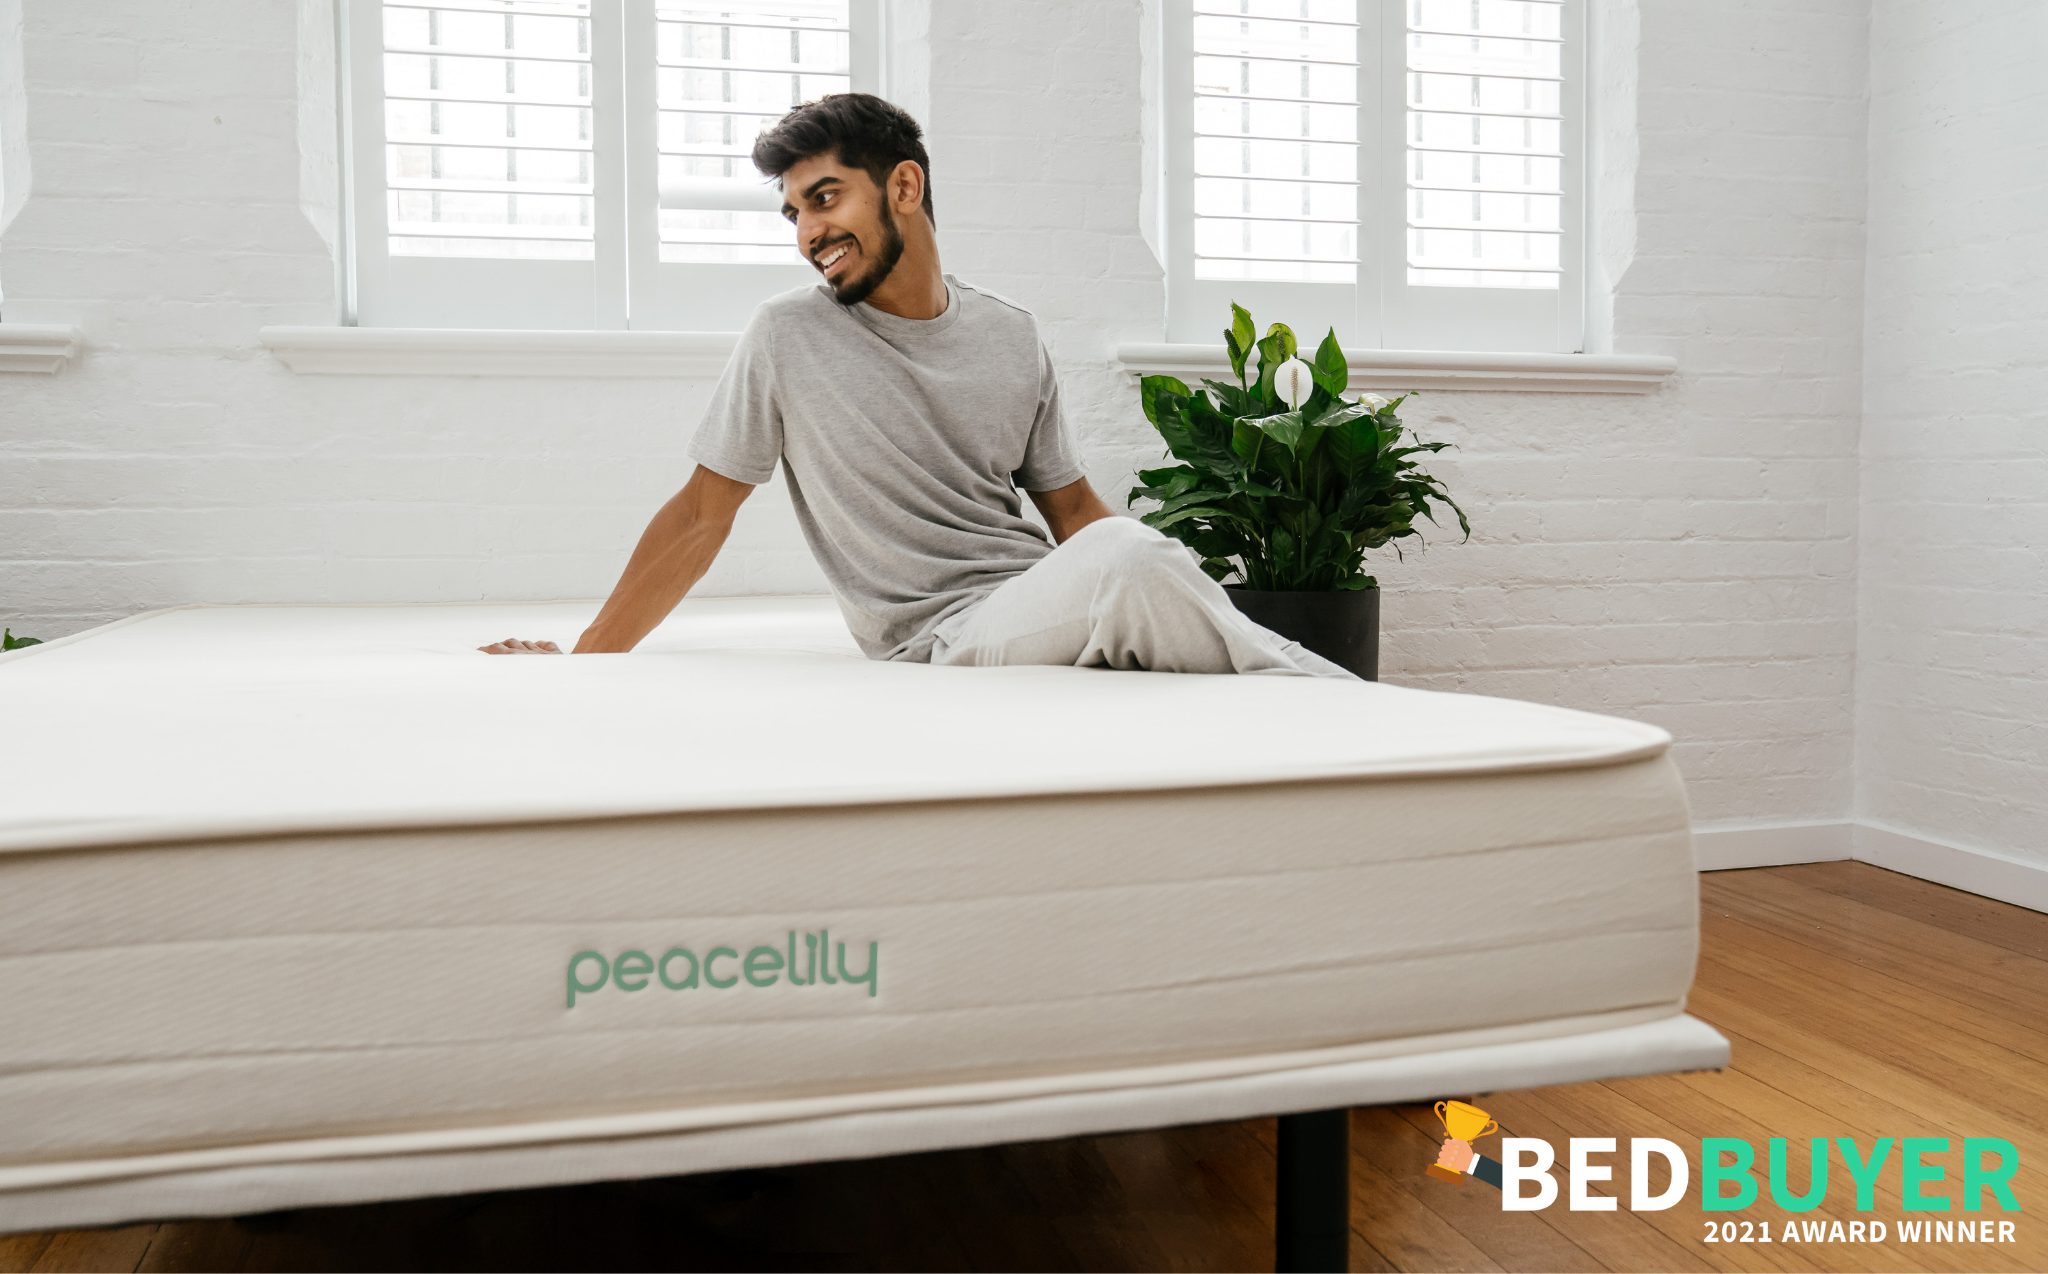 Non-toxic and eco-friendly mattresses